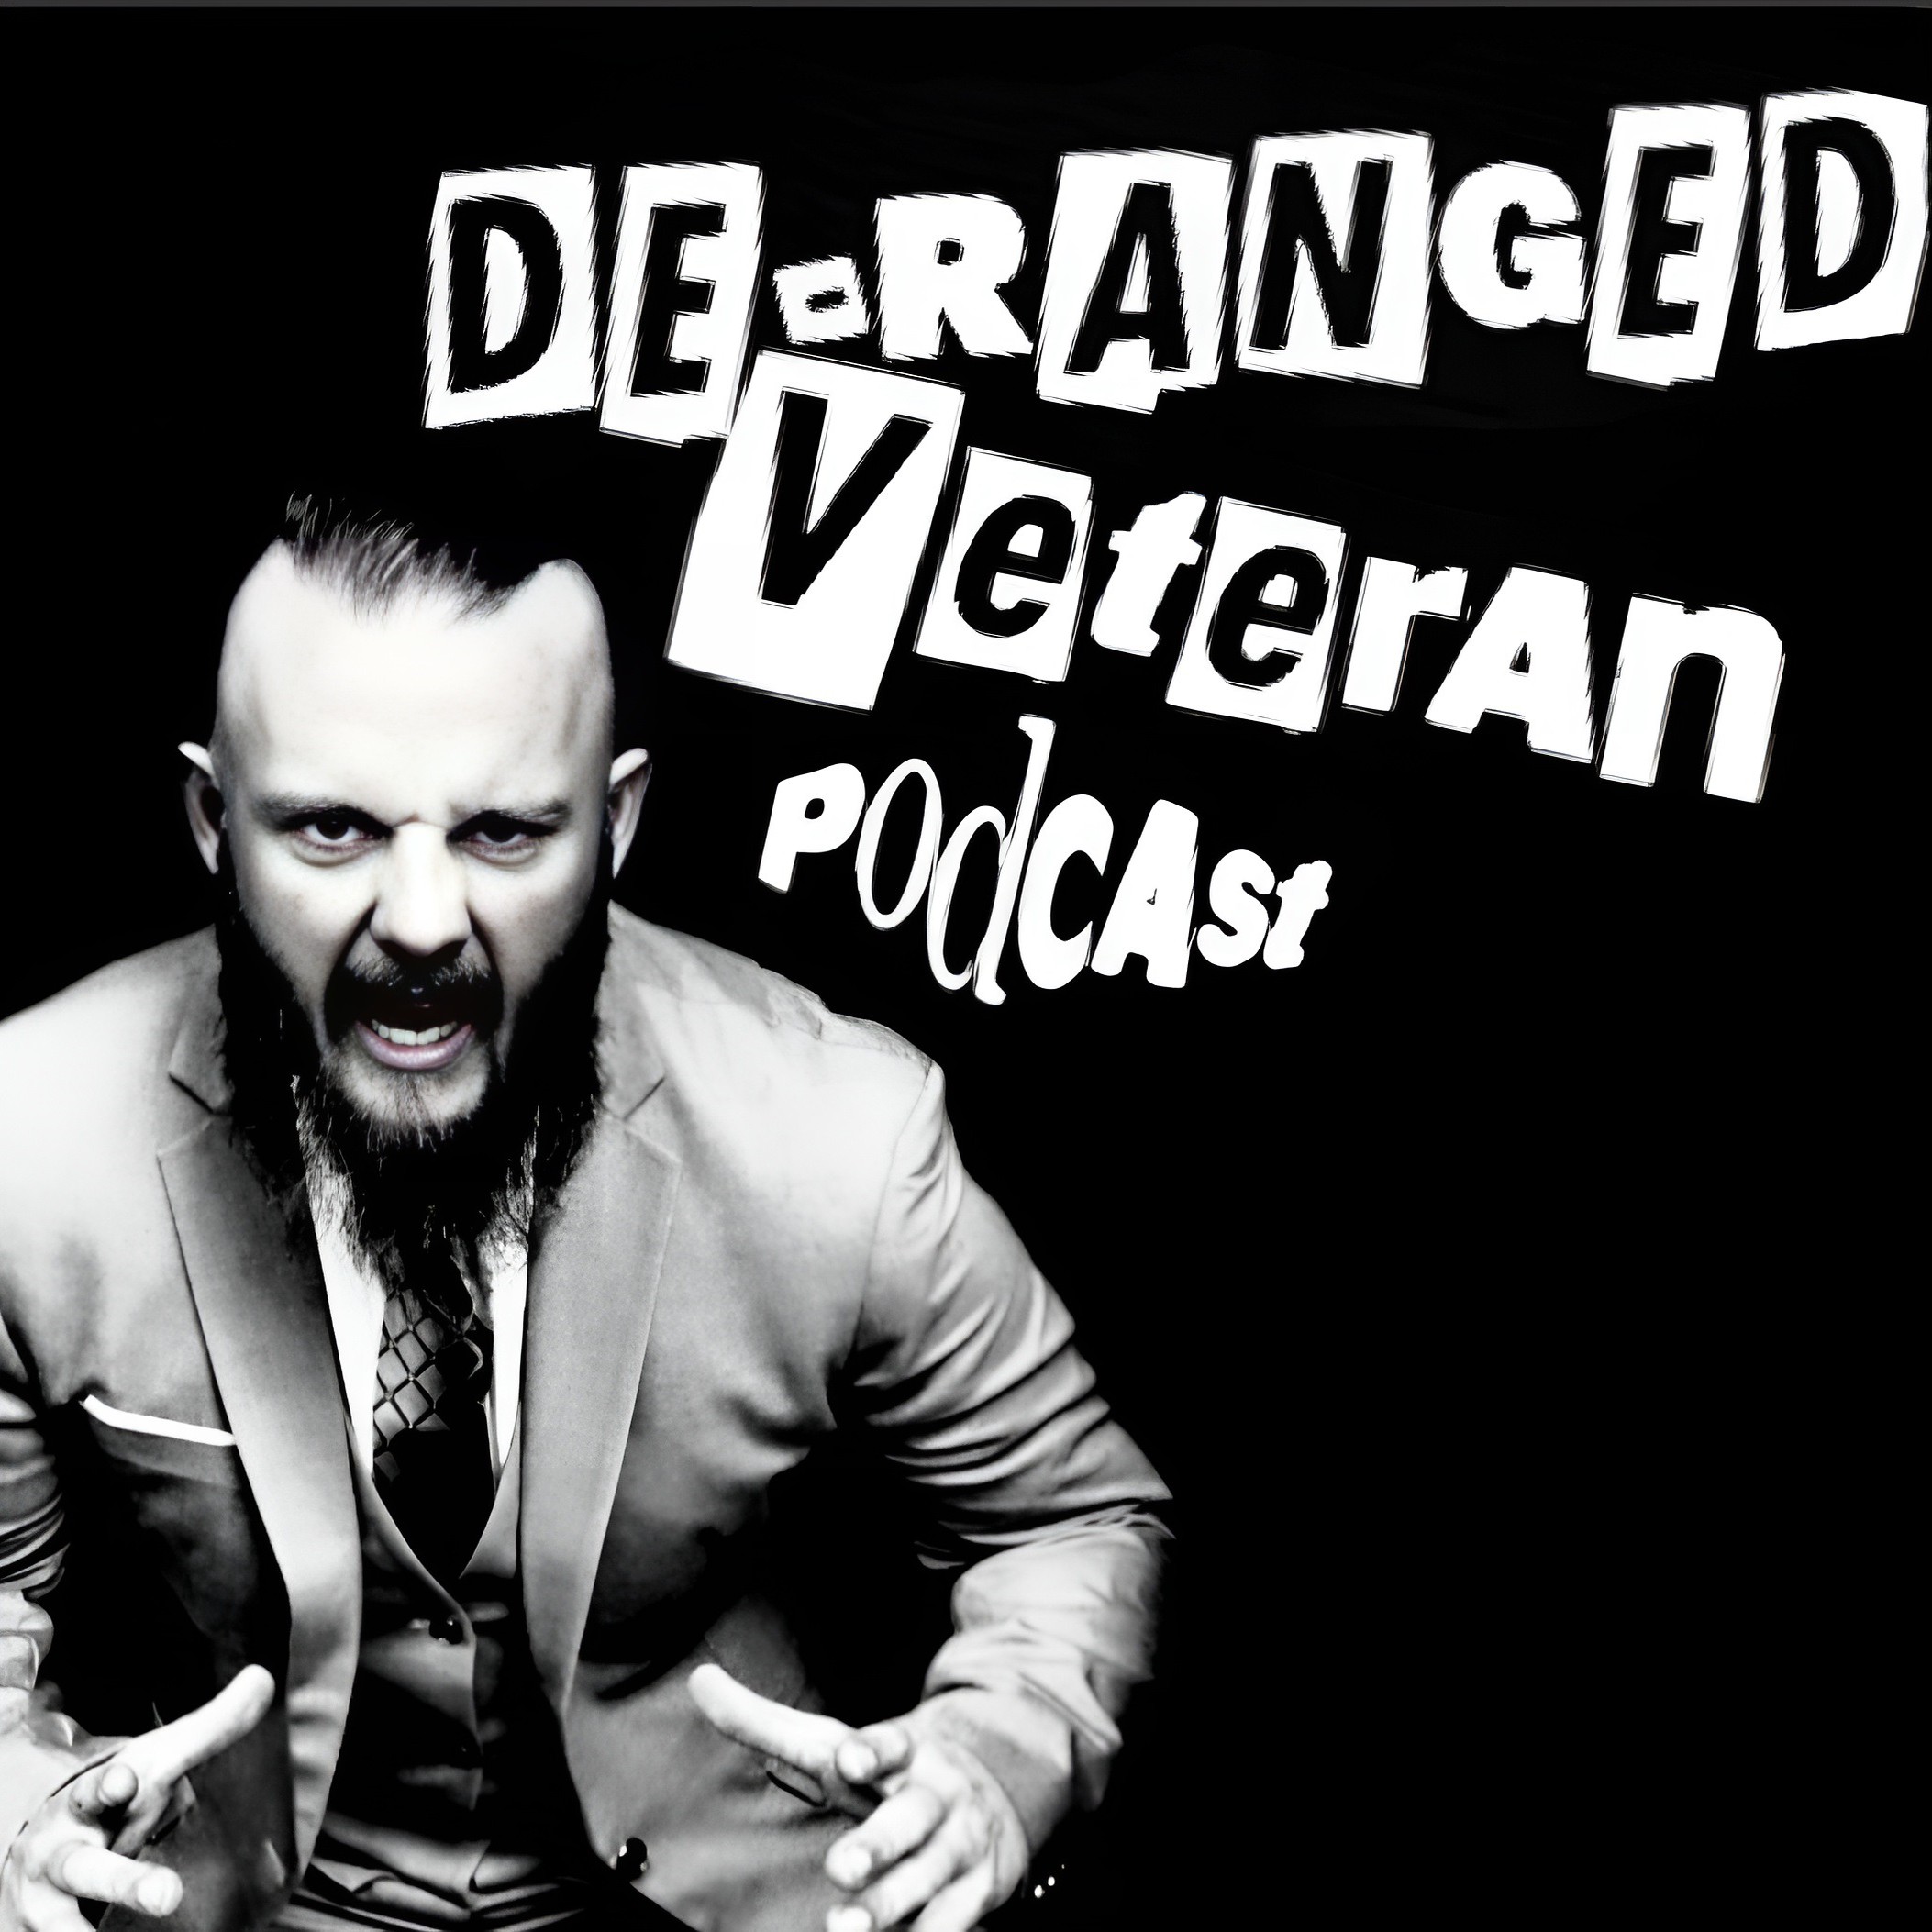 DeRanged Veteran Podcast